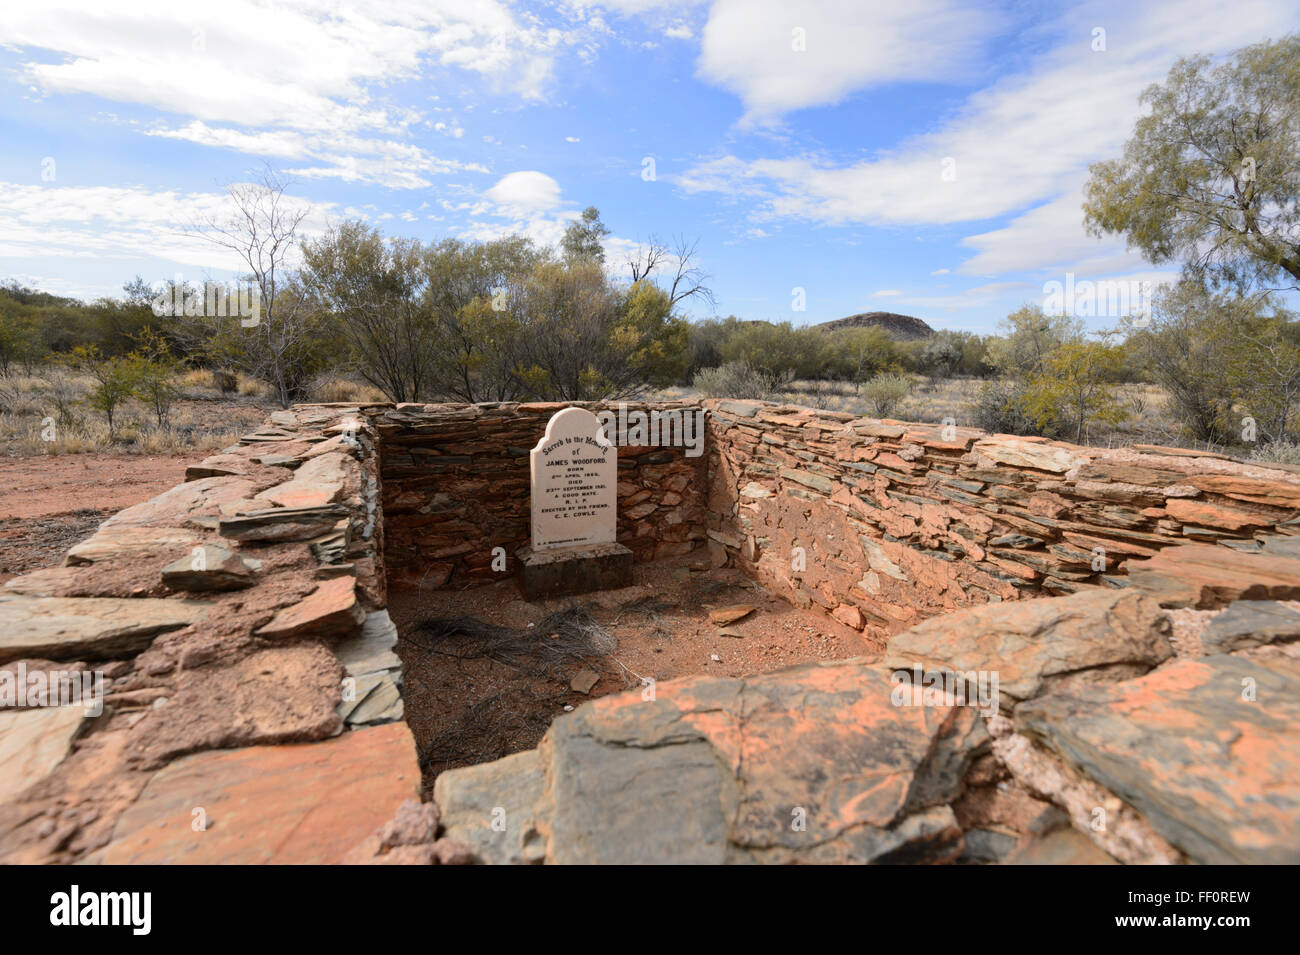 James Woodford Grab, Arltunga historischen Reserve, Goldrausch Geisterstadt, Northern Territory, Australien Stockfoto